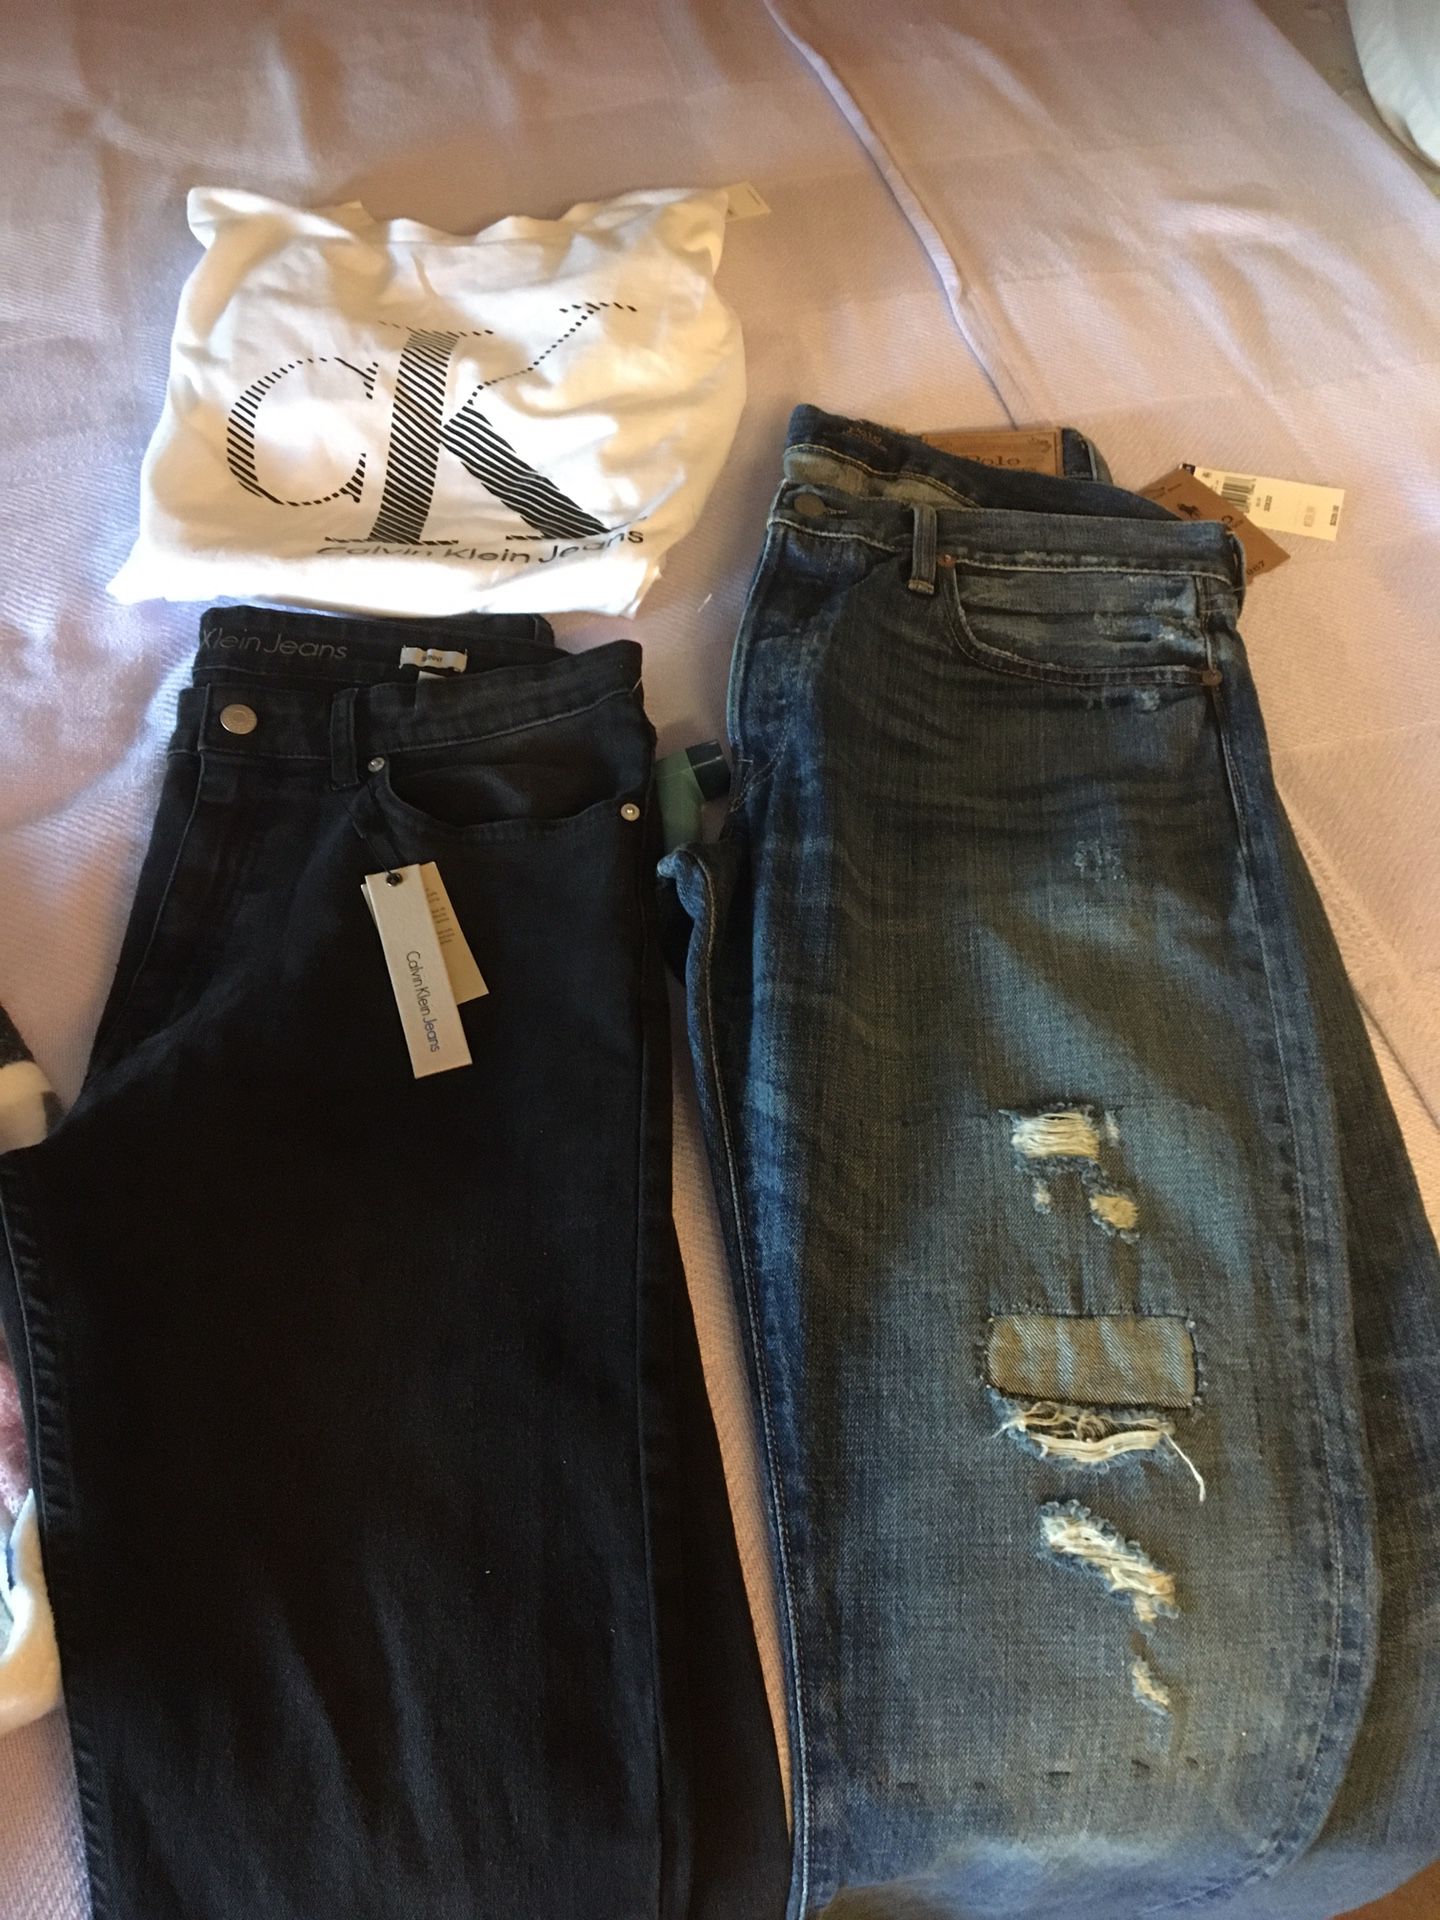 Calvin Klein T-shirt Calvin Klein jeans and a pair of Levi jeans